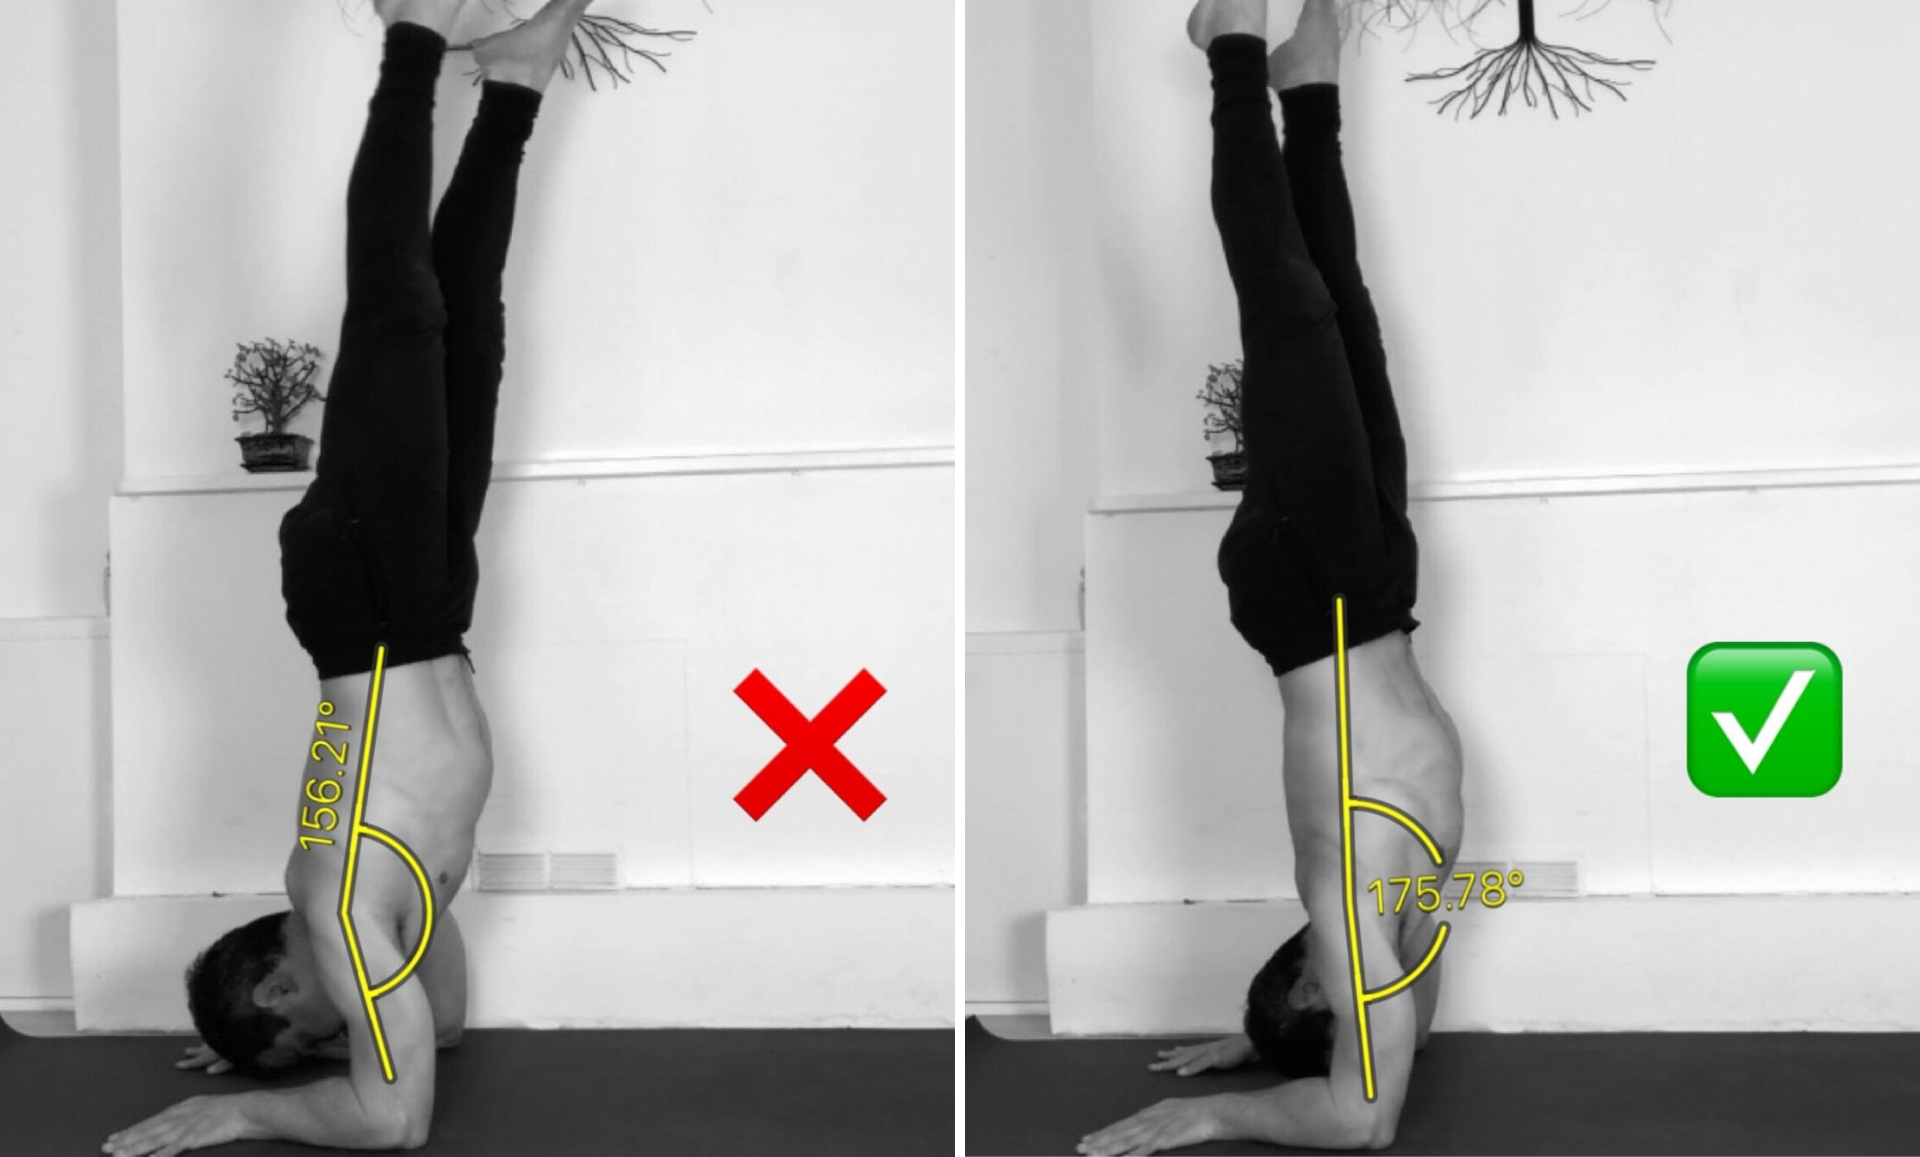 How to practice Pincha Mayurasana or Forearm Balance Pose